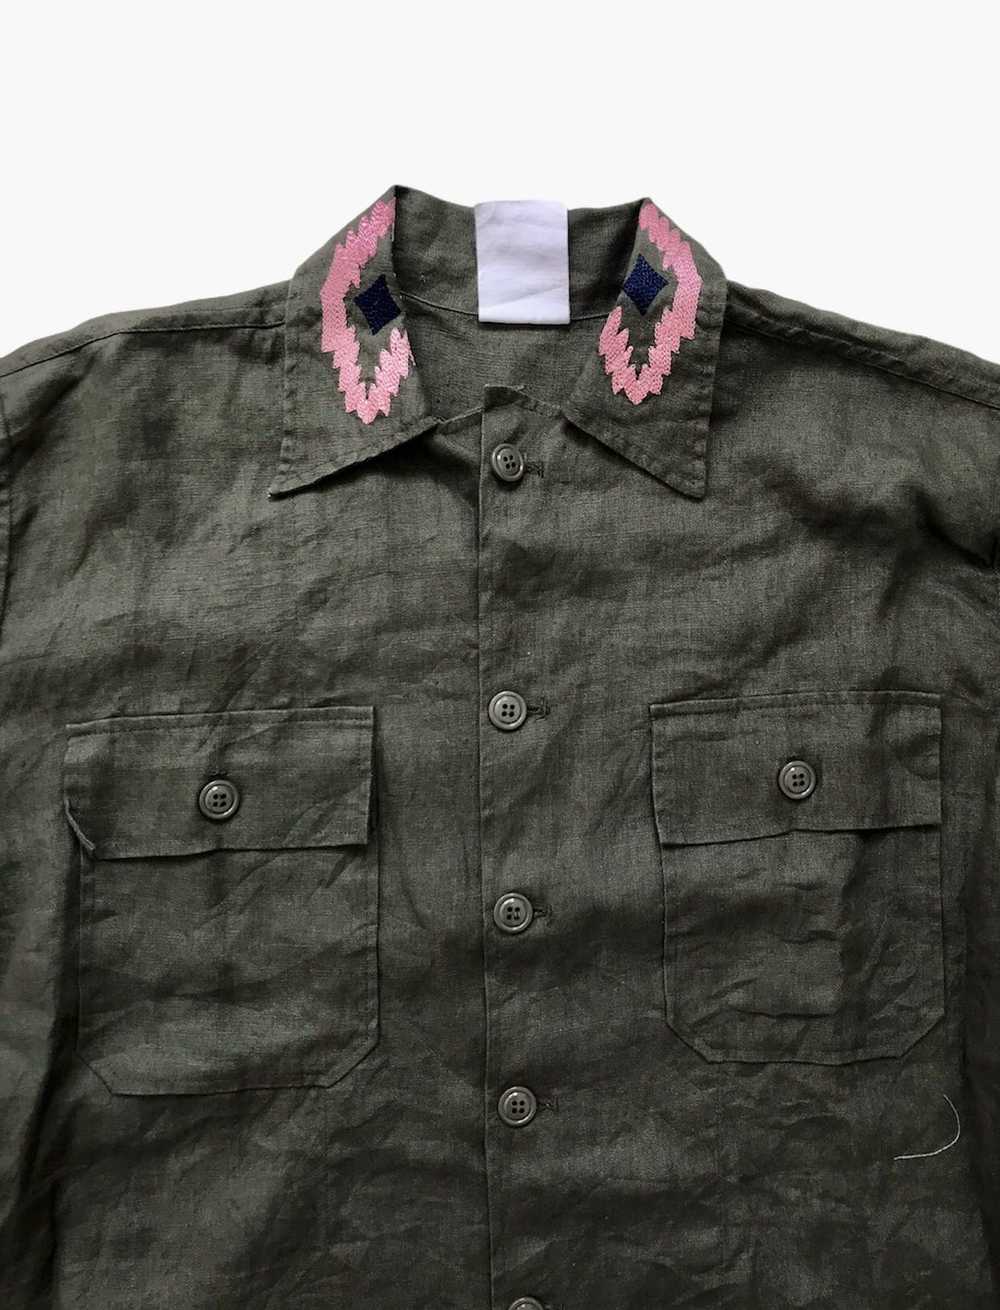 Native × Vintage Chimayo Military Shirt - image 5